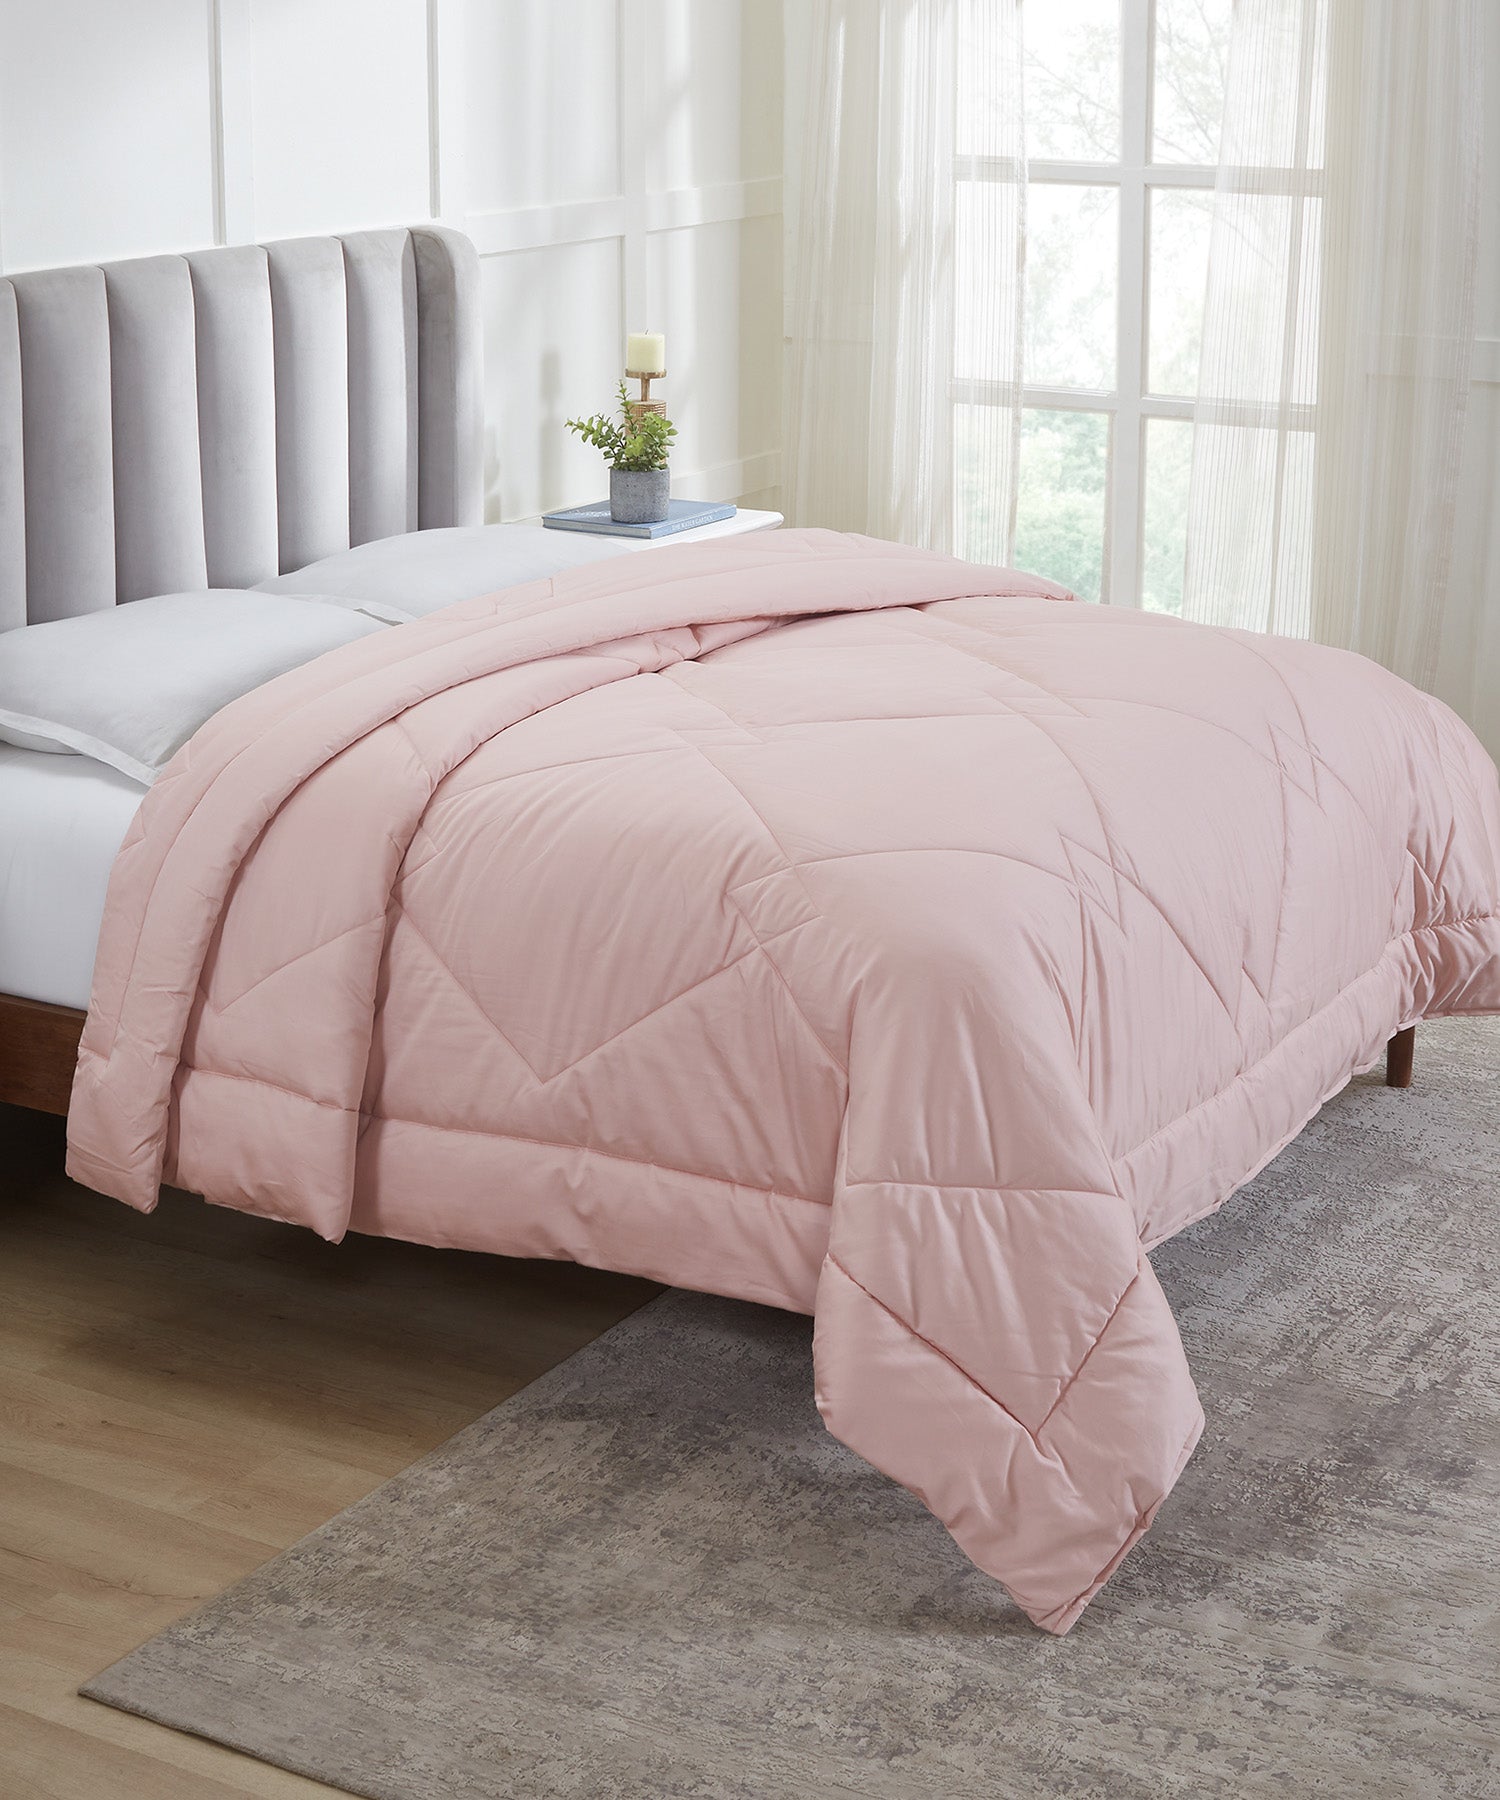 King Comforter ₹7199/-